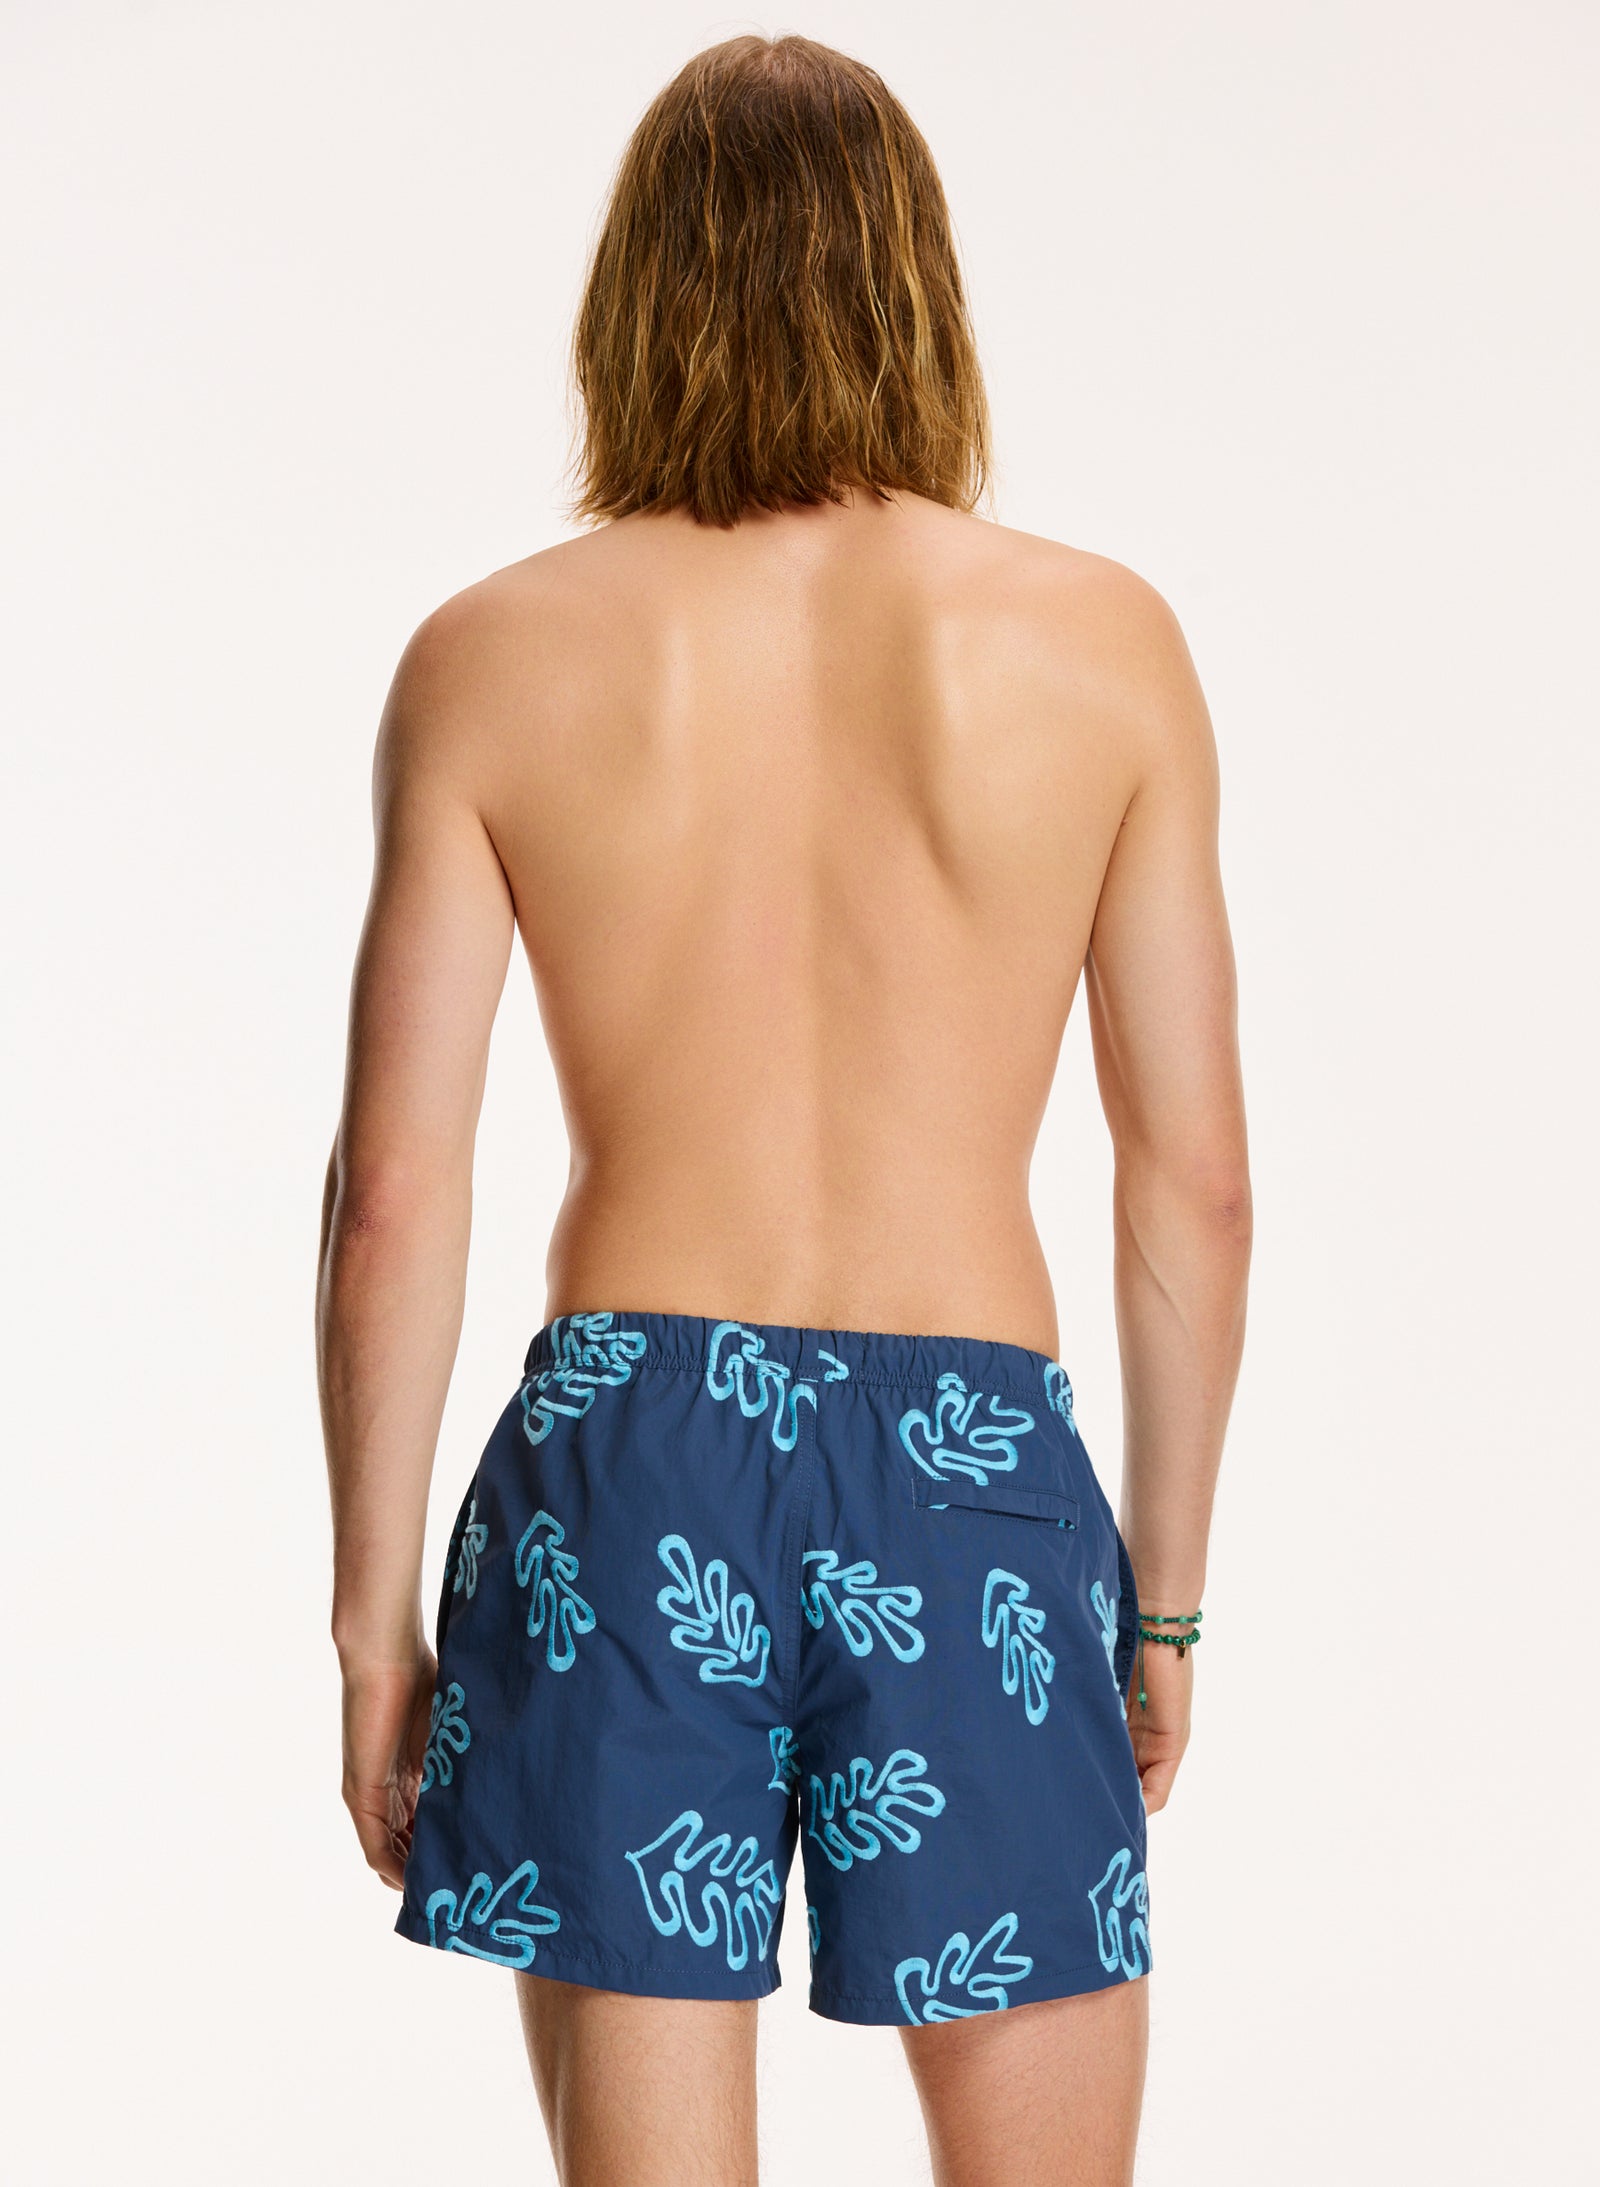 men swim shorts NICK embroidery